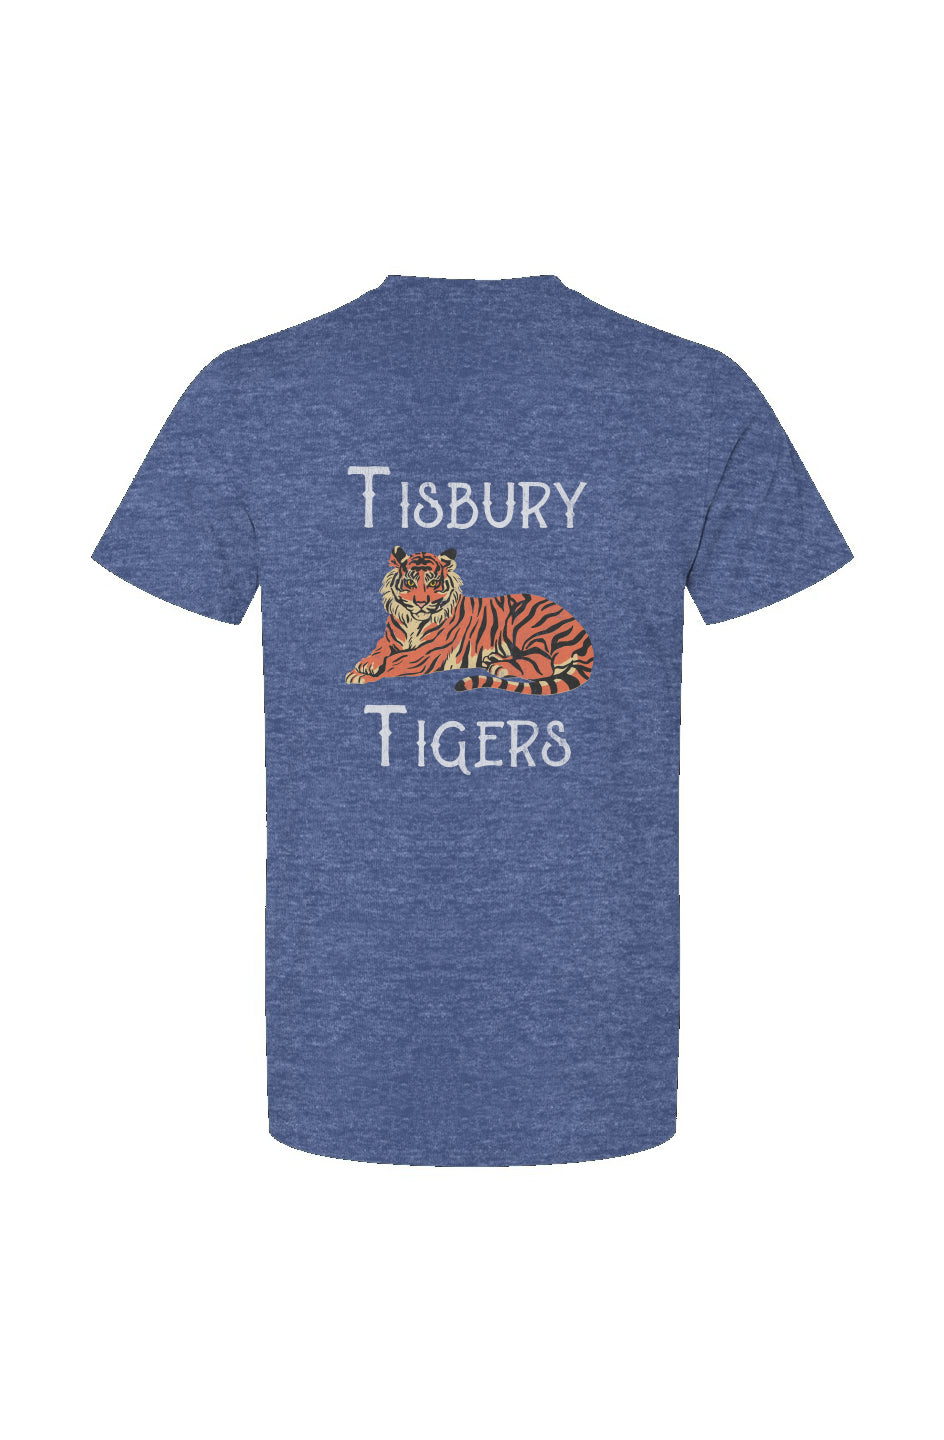 Tisbury Tigers Unisex Tee